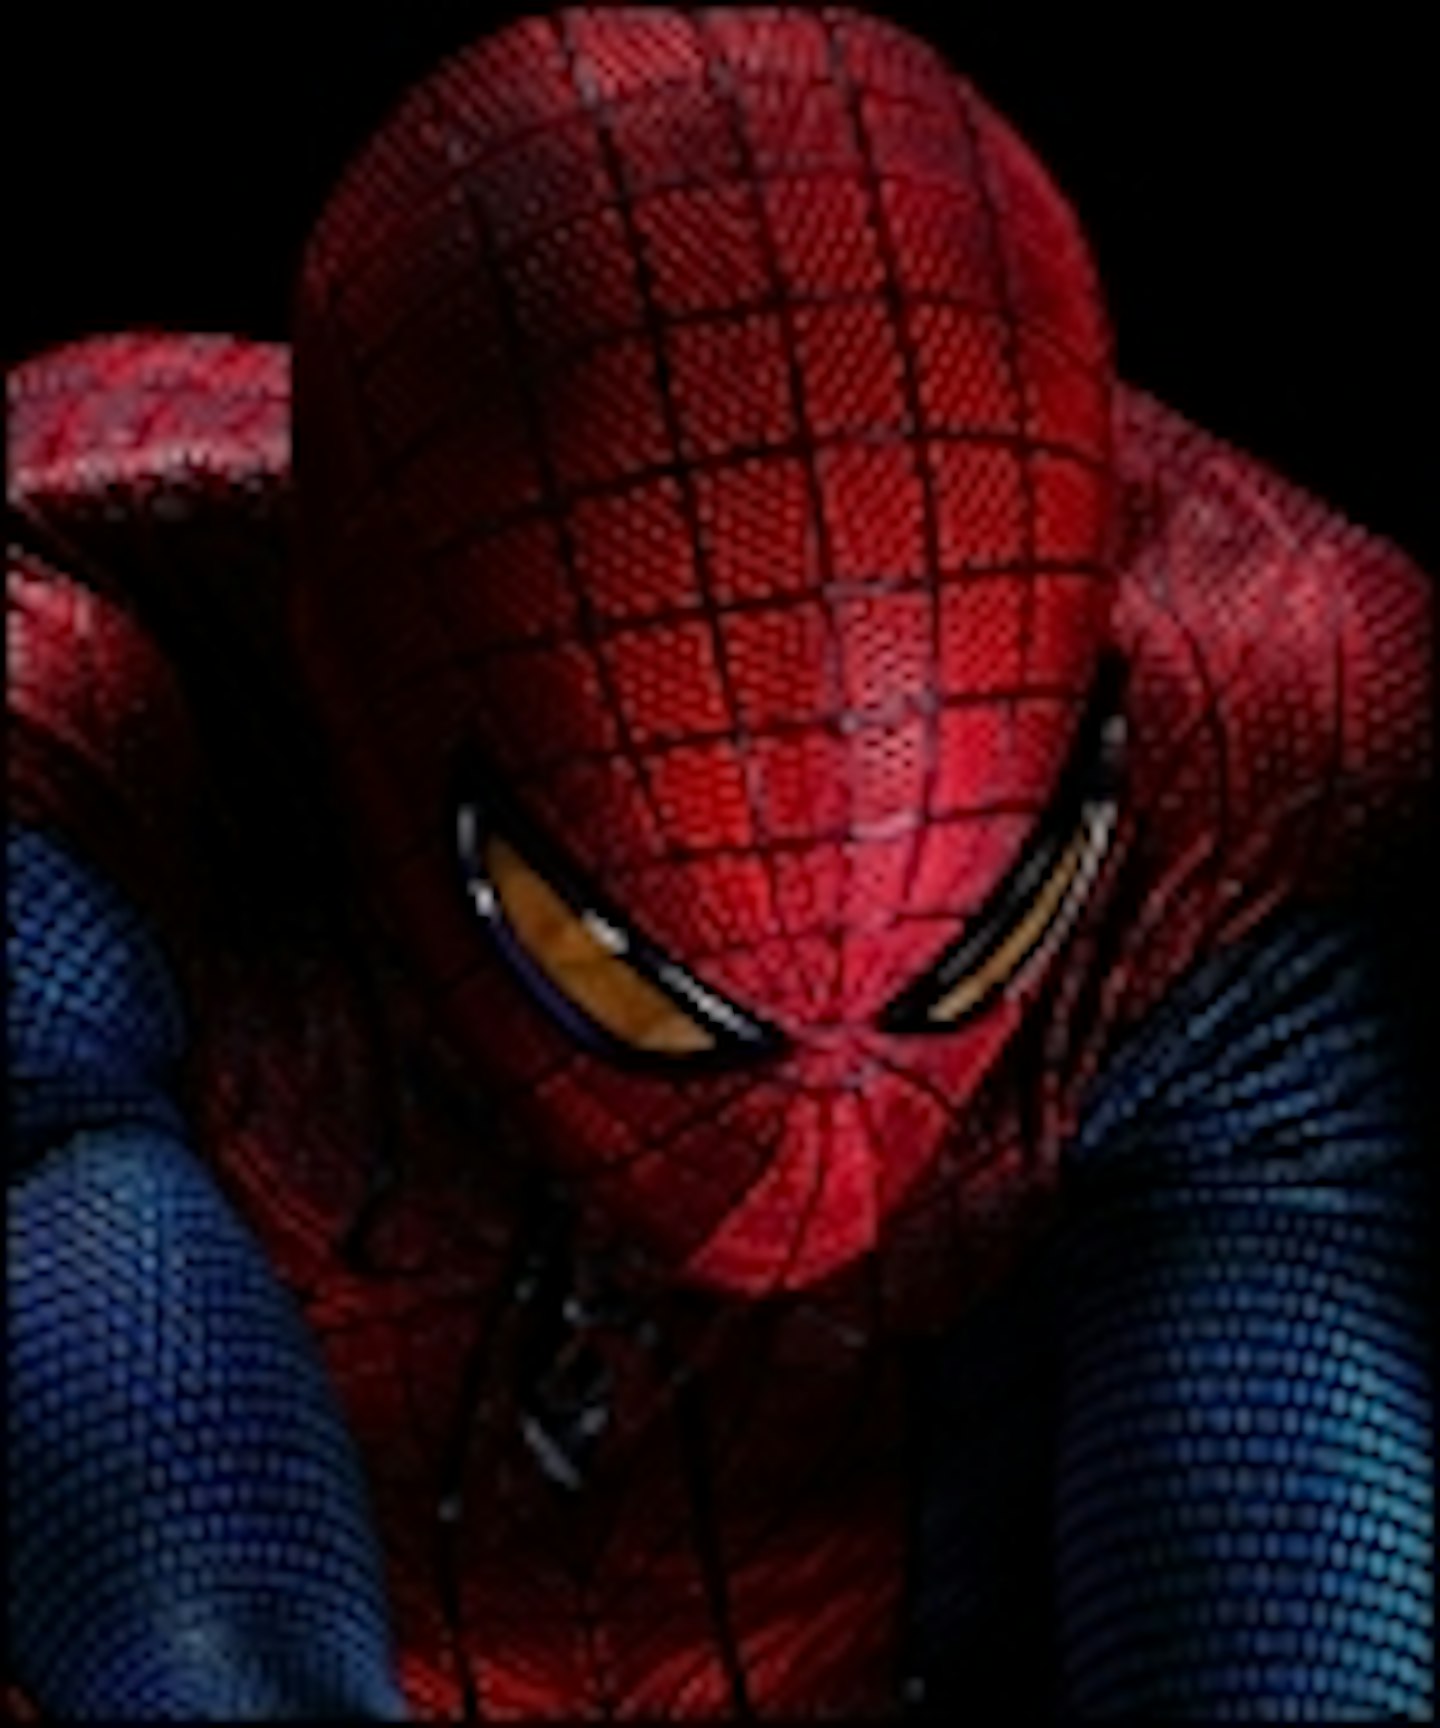 Meet The Amazing Spider-Man